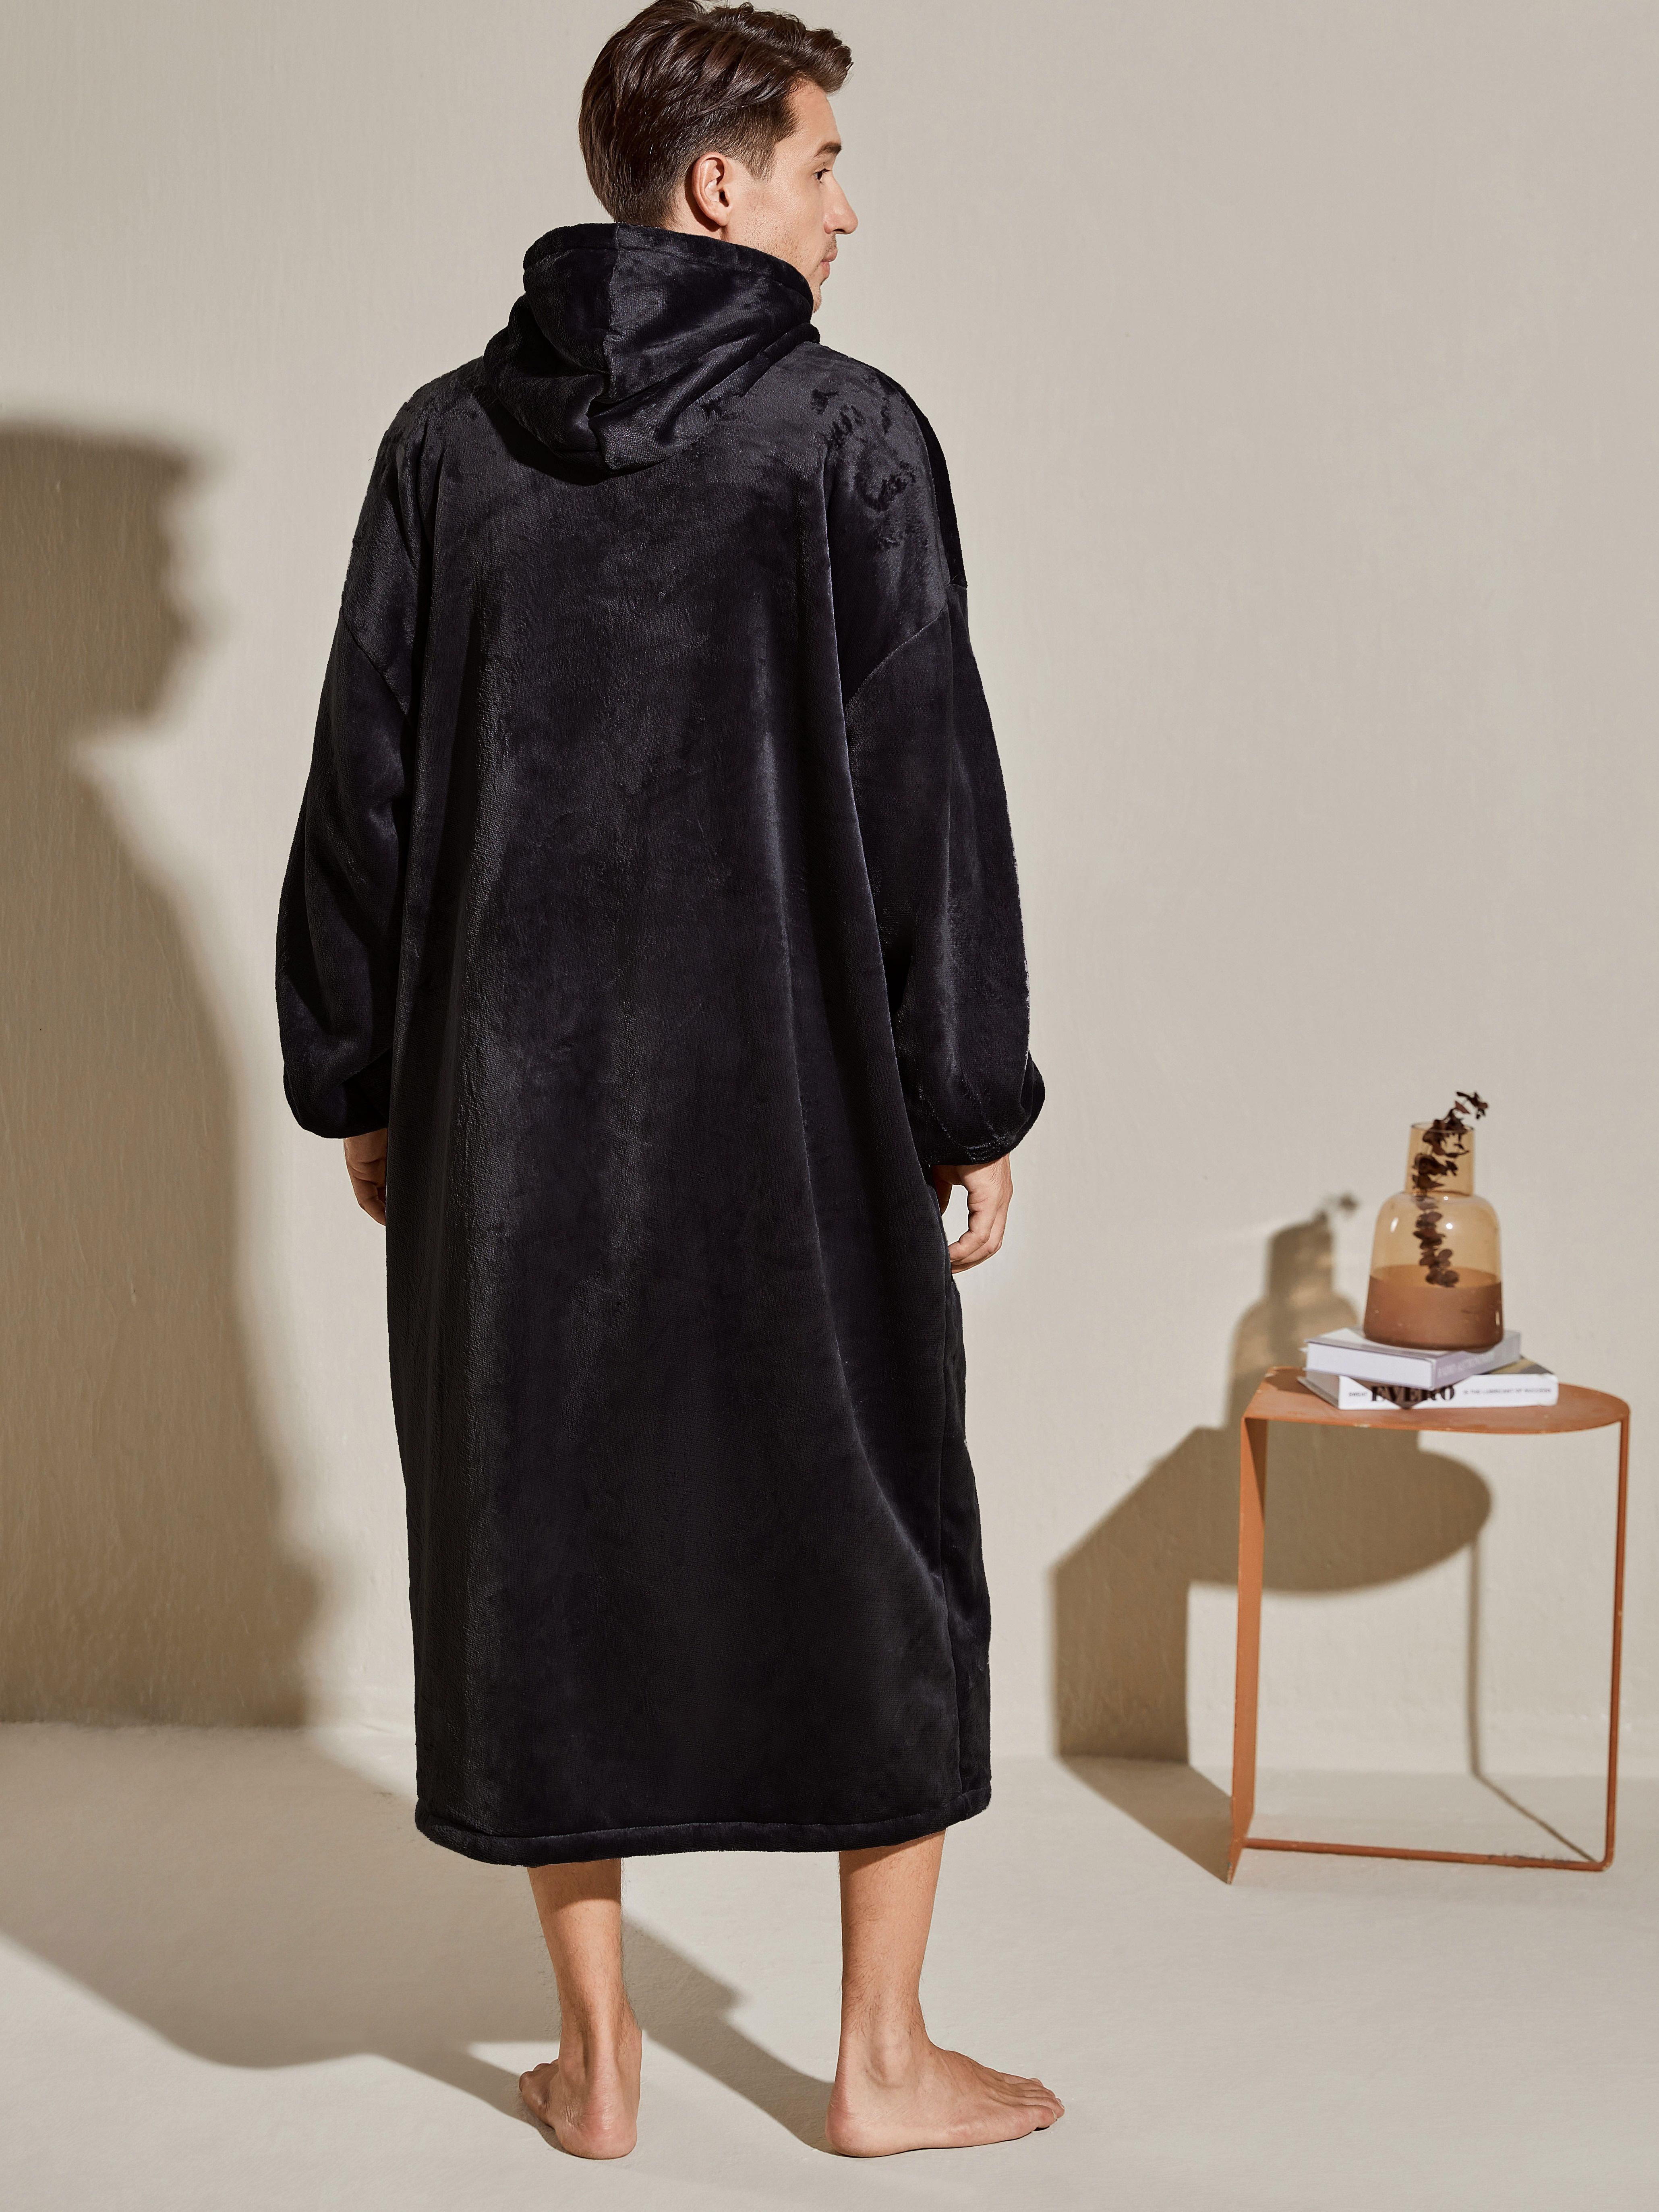 Hooded Velour Robe, Sleepwear